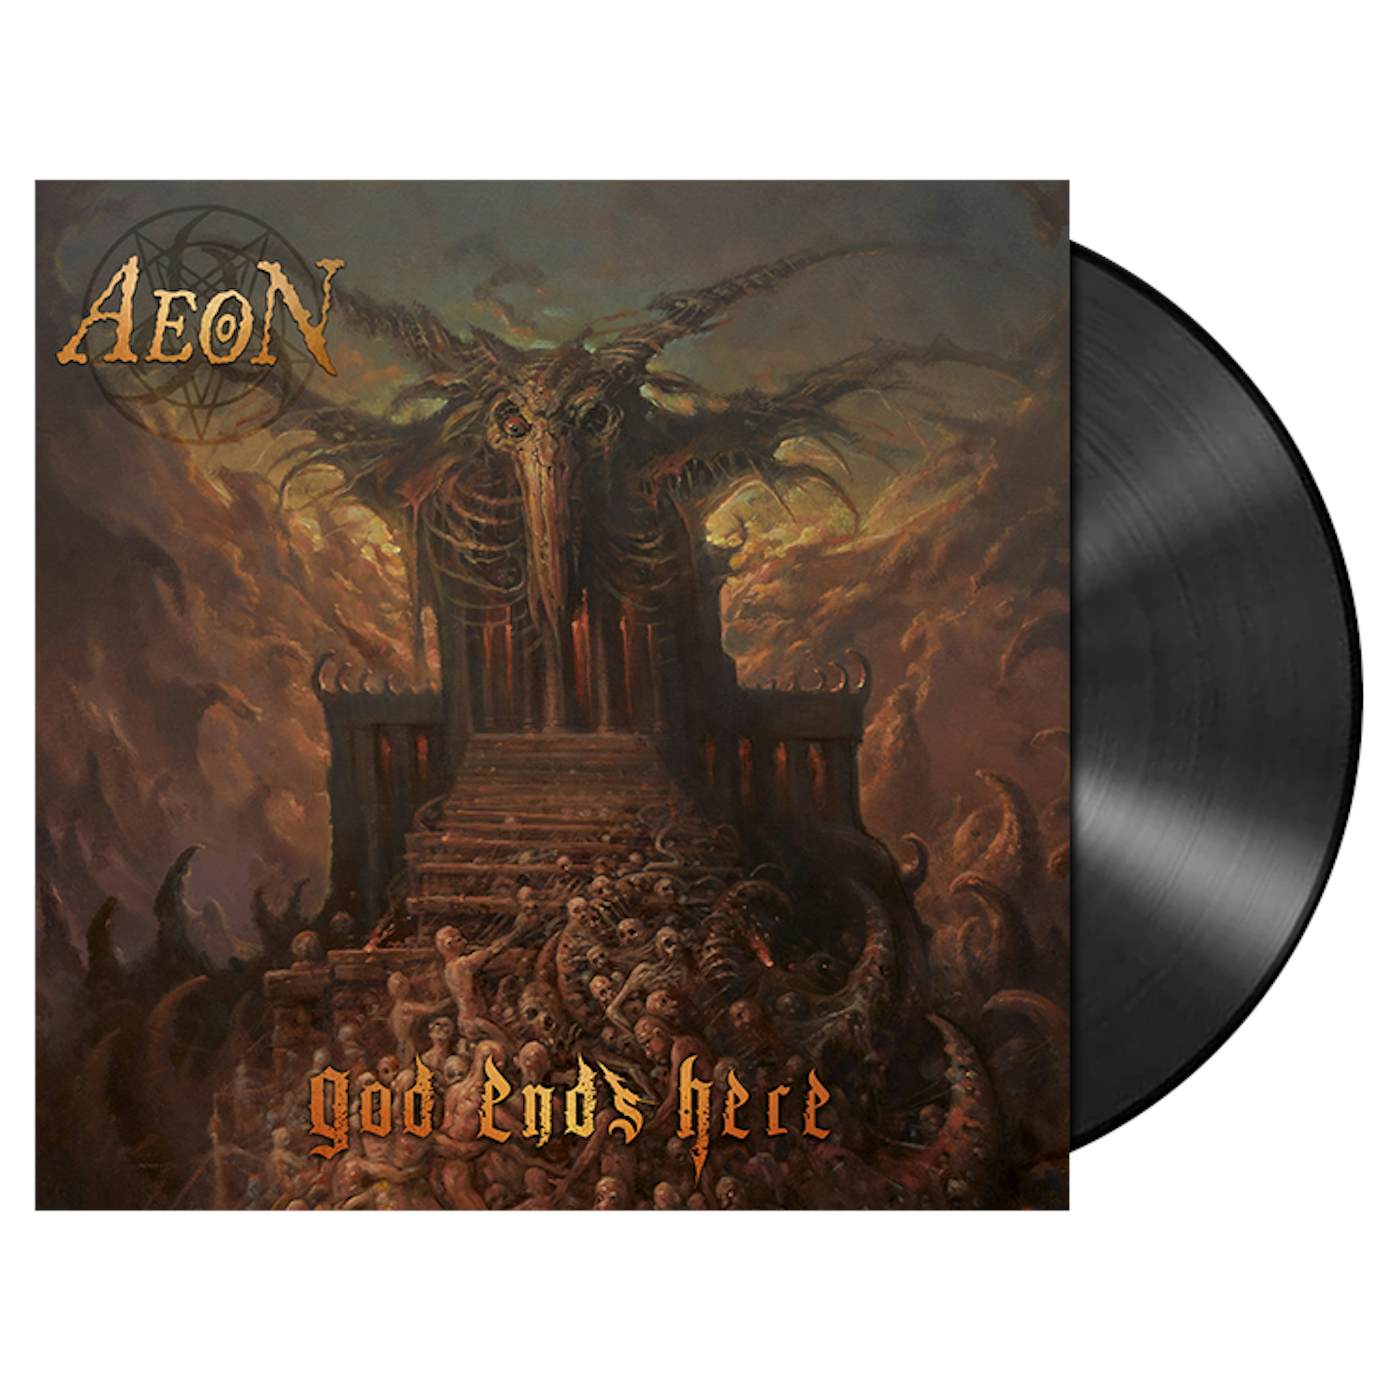 AEON - 'God Ends Here' LP (Vinyl)